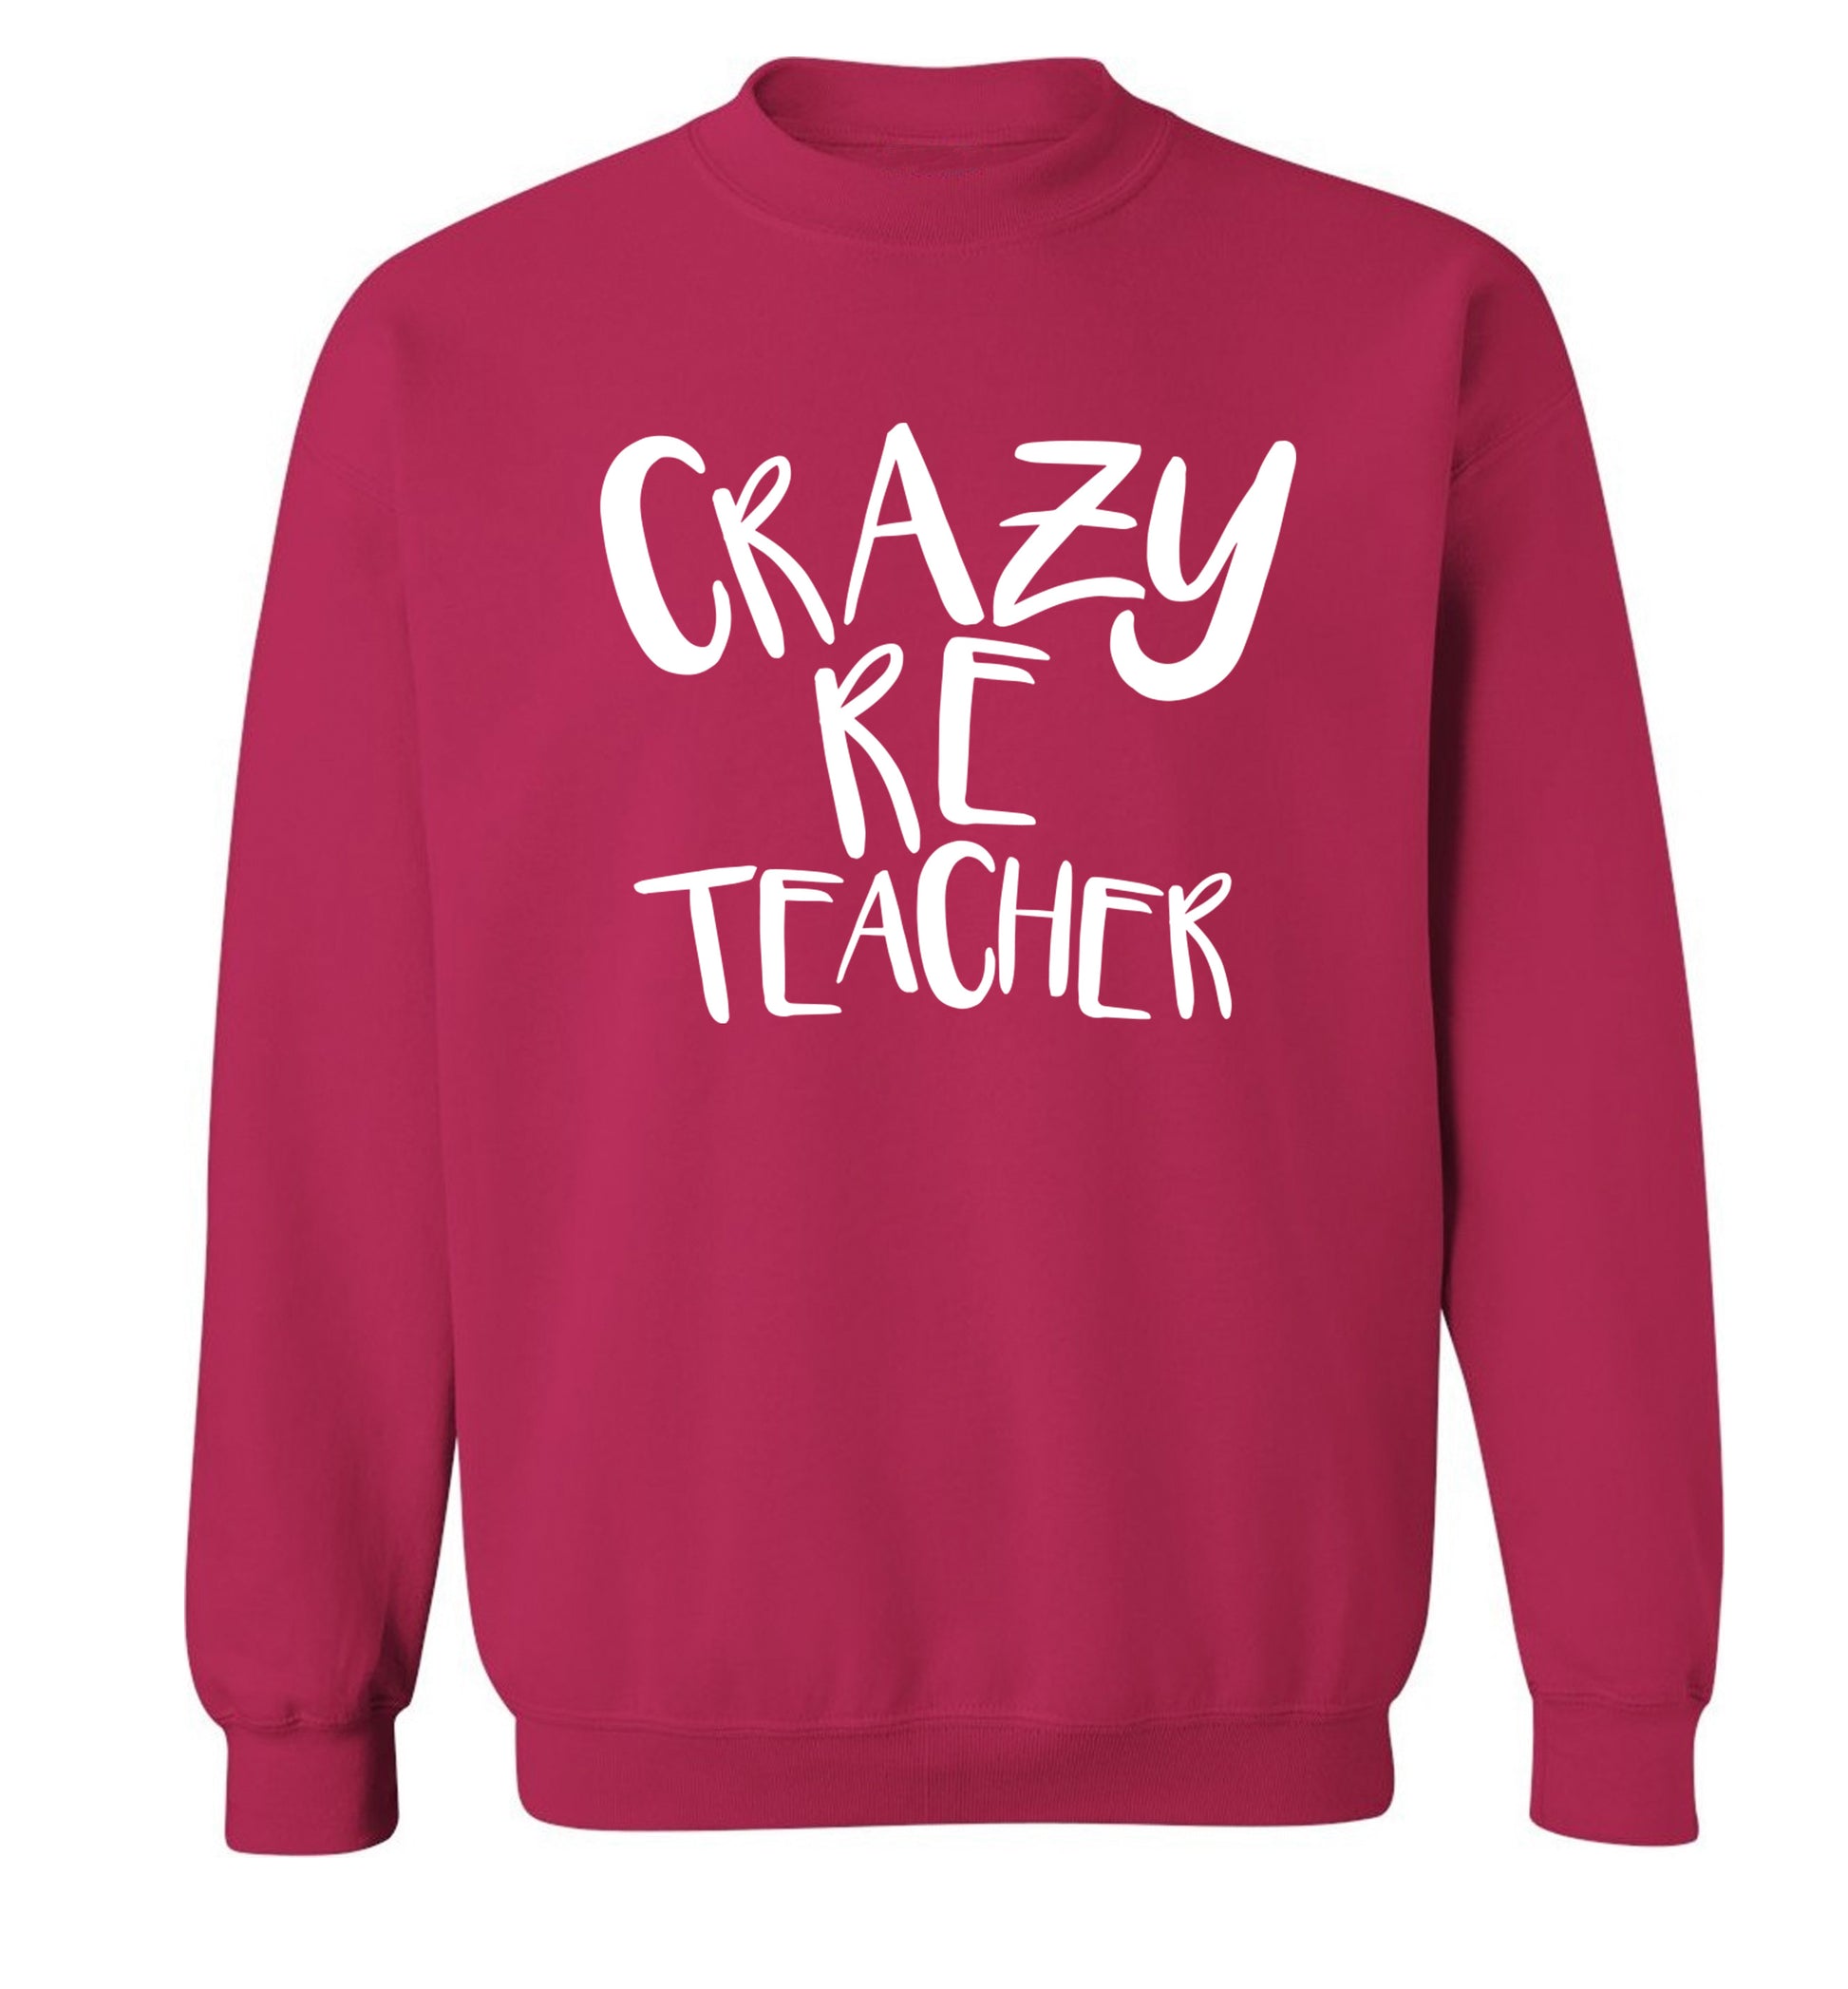 Crazy RE teacher Adult's unisex pink Sweater 2XL